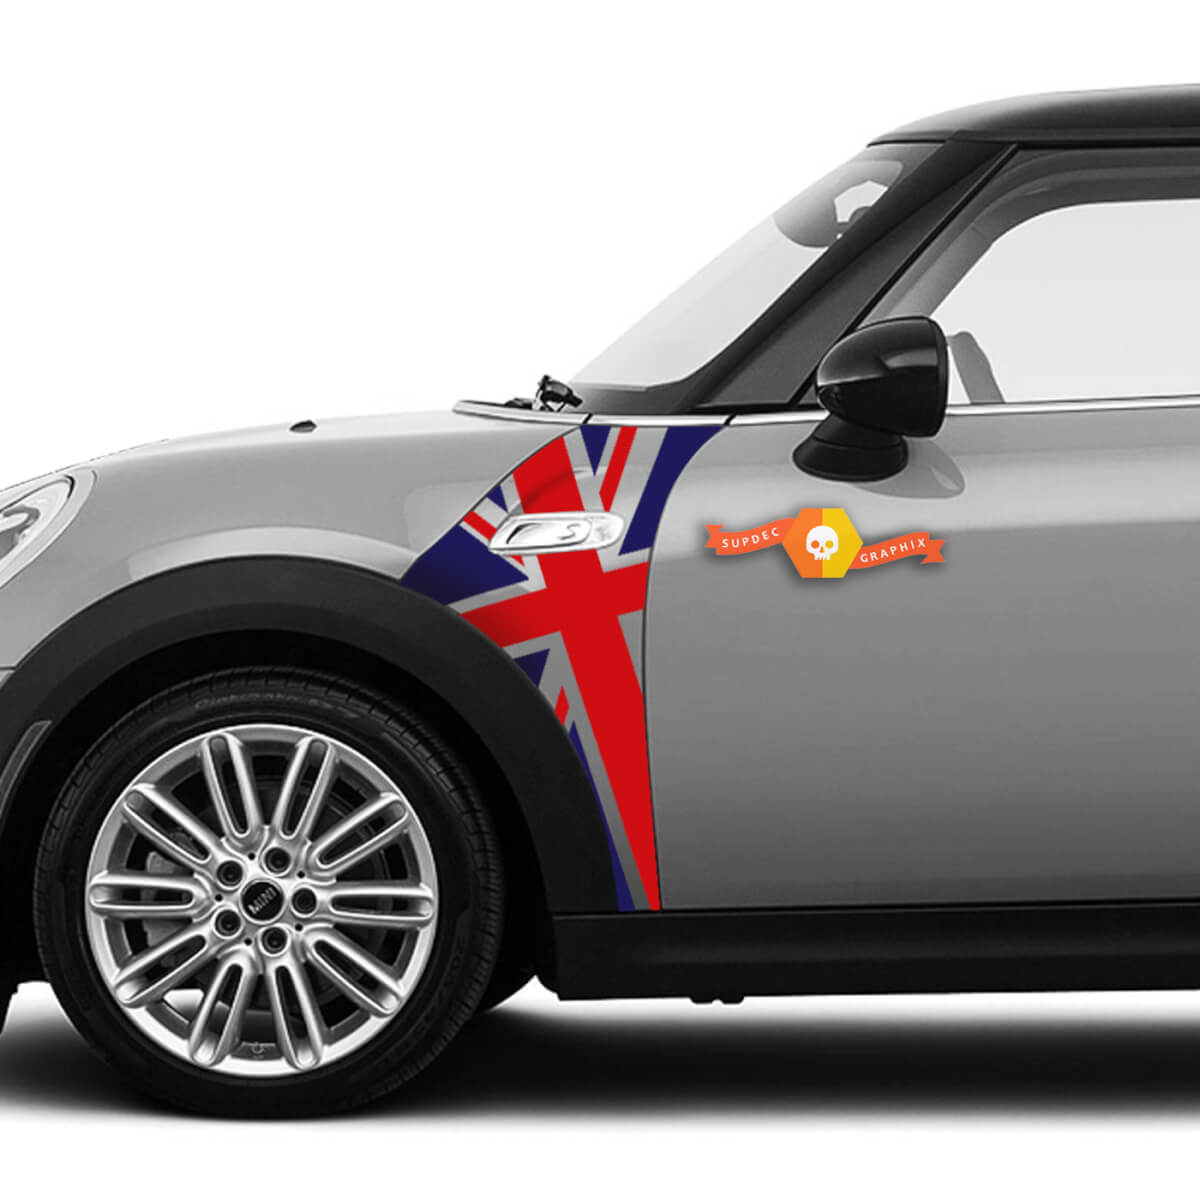 A Panel Mini Cooper S model Union Jack UK flag fender graphic decal sticker